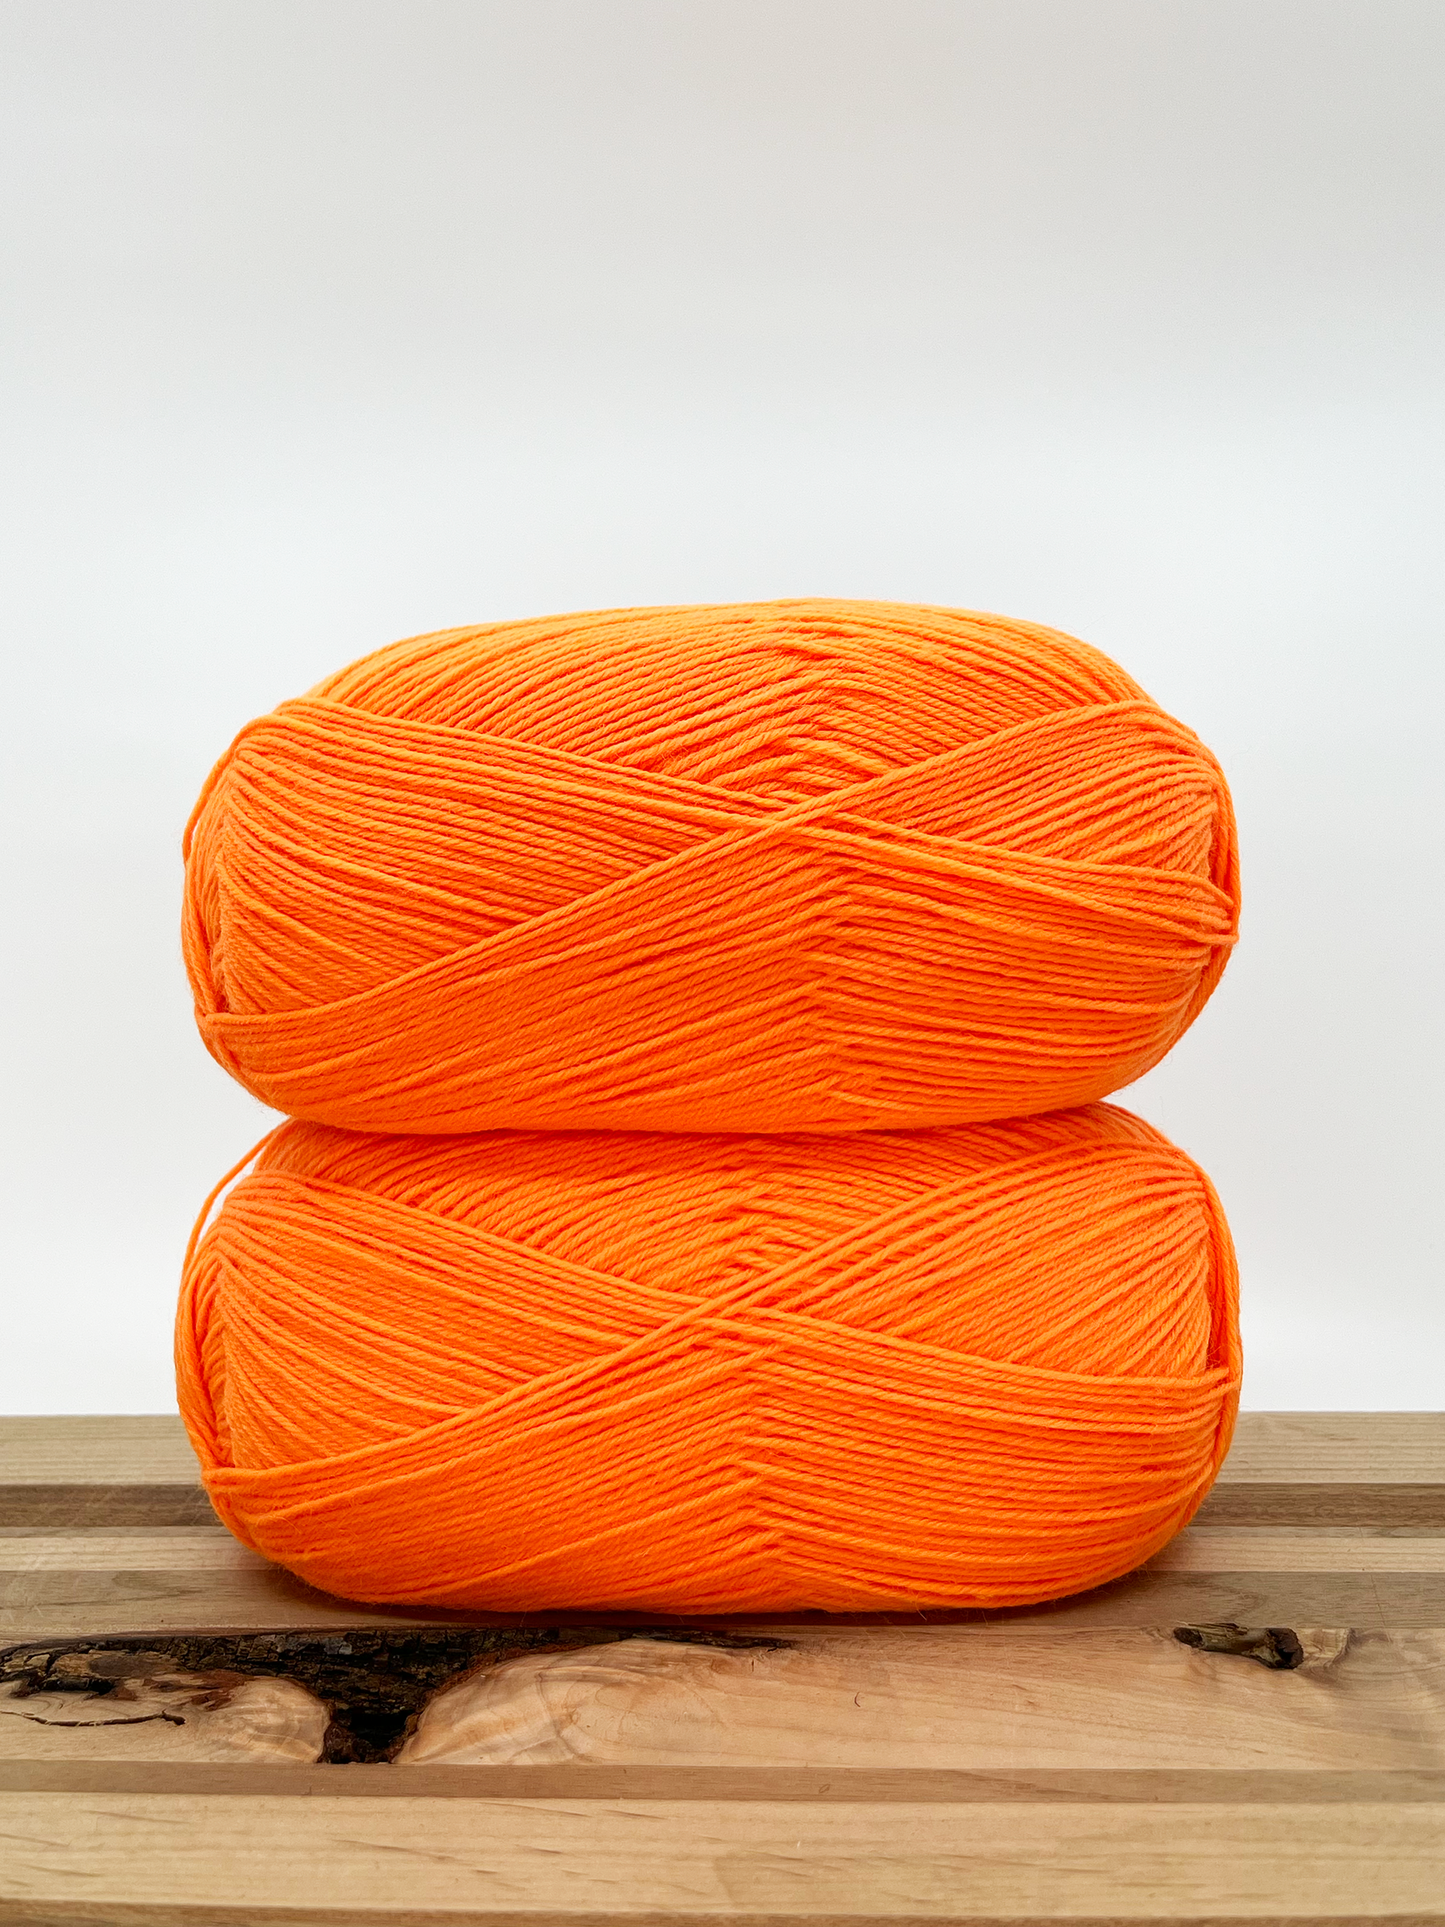 2013 - neon orange